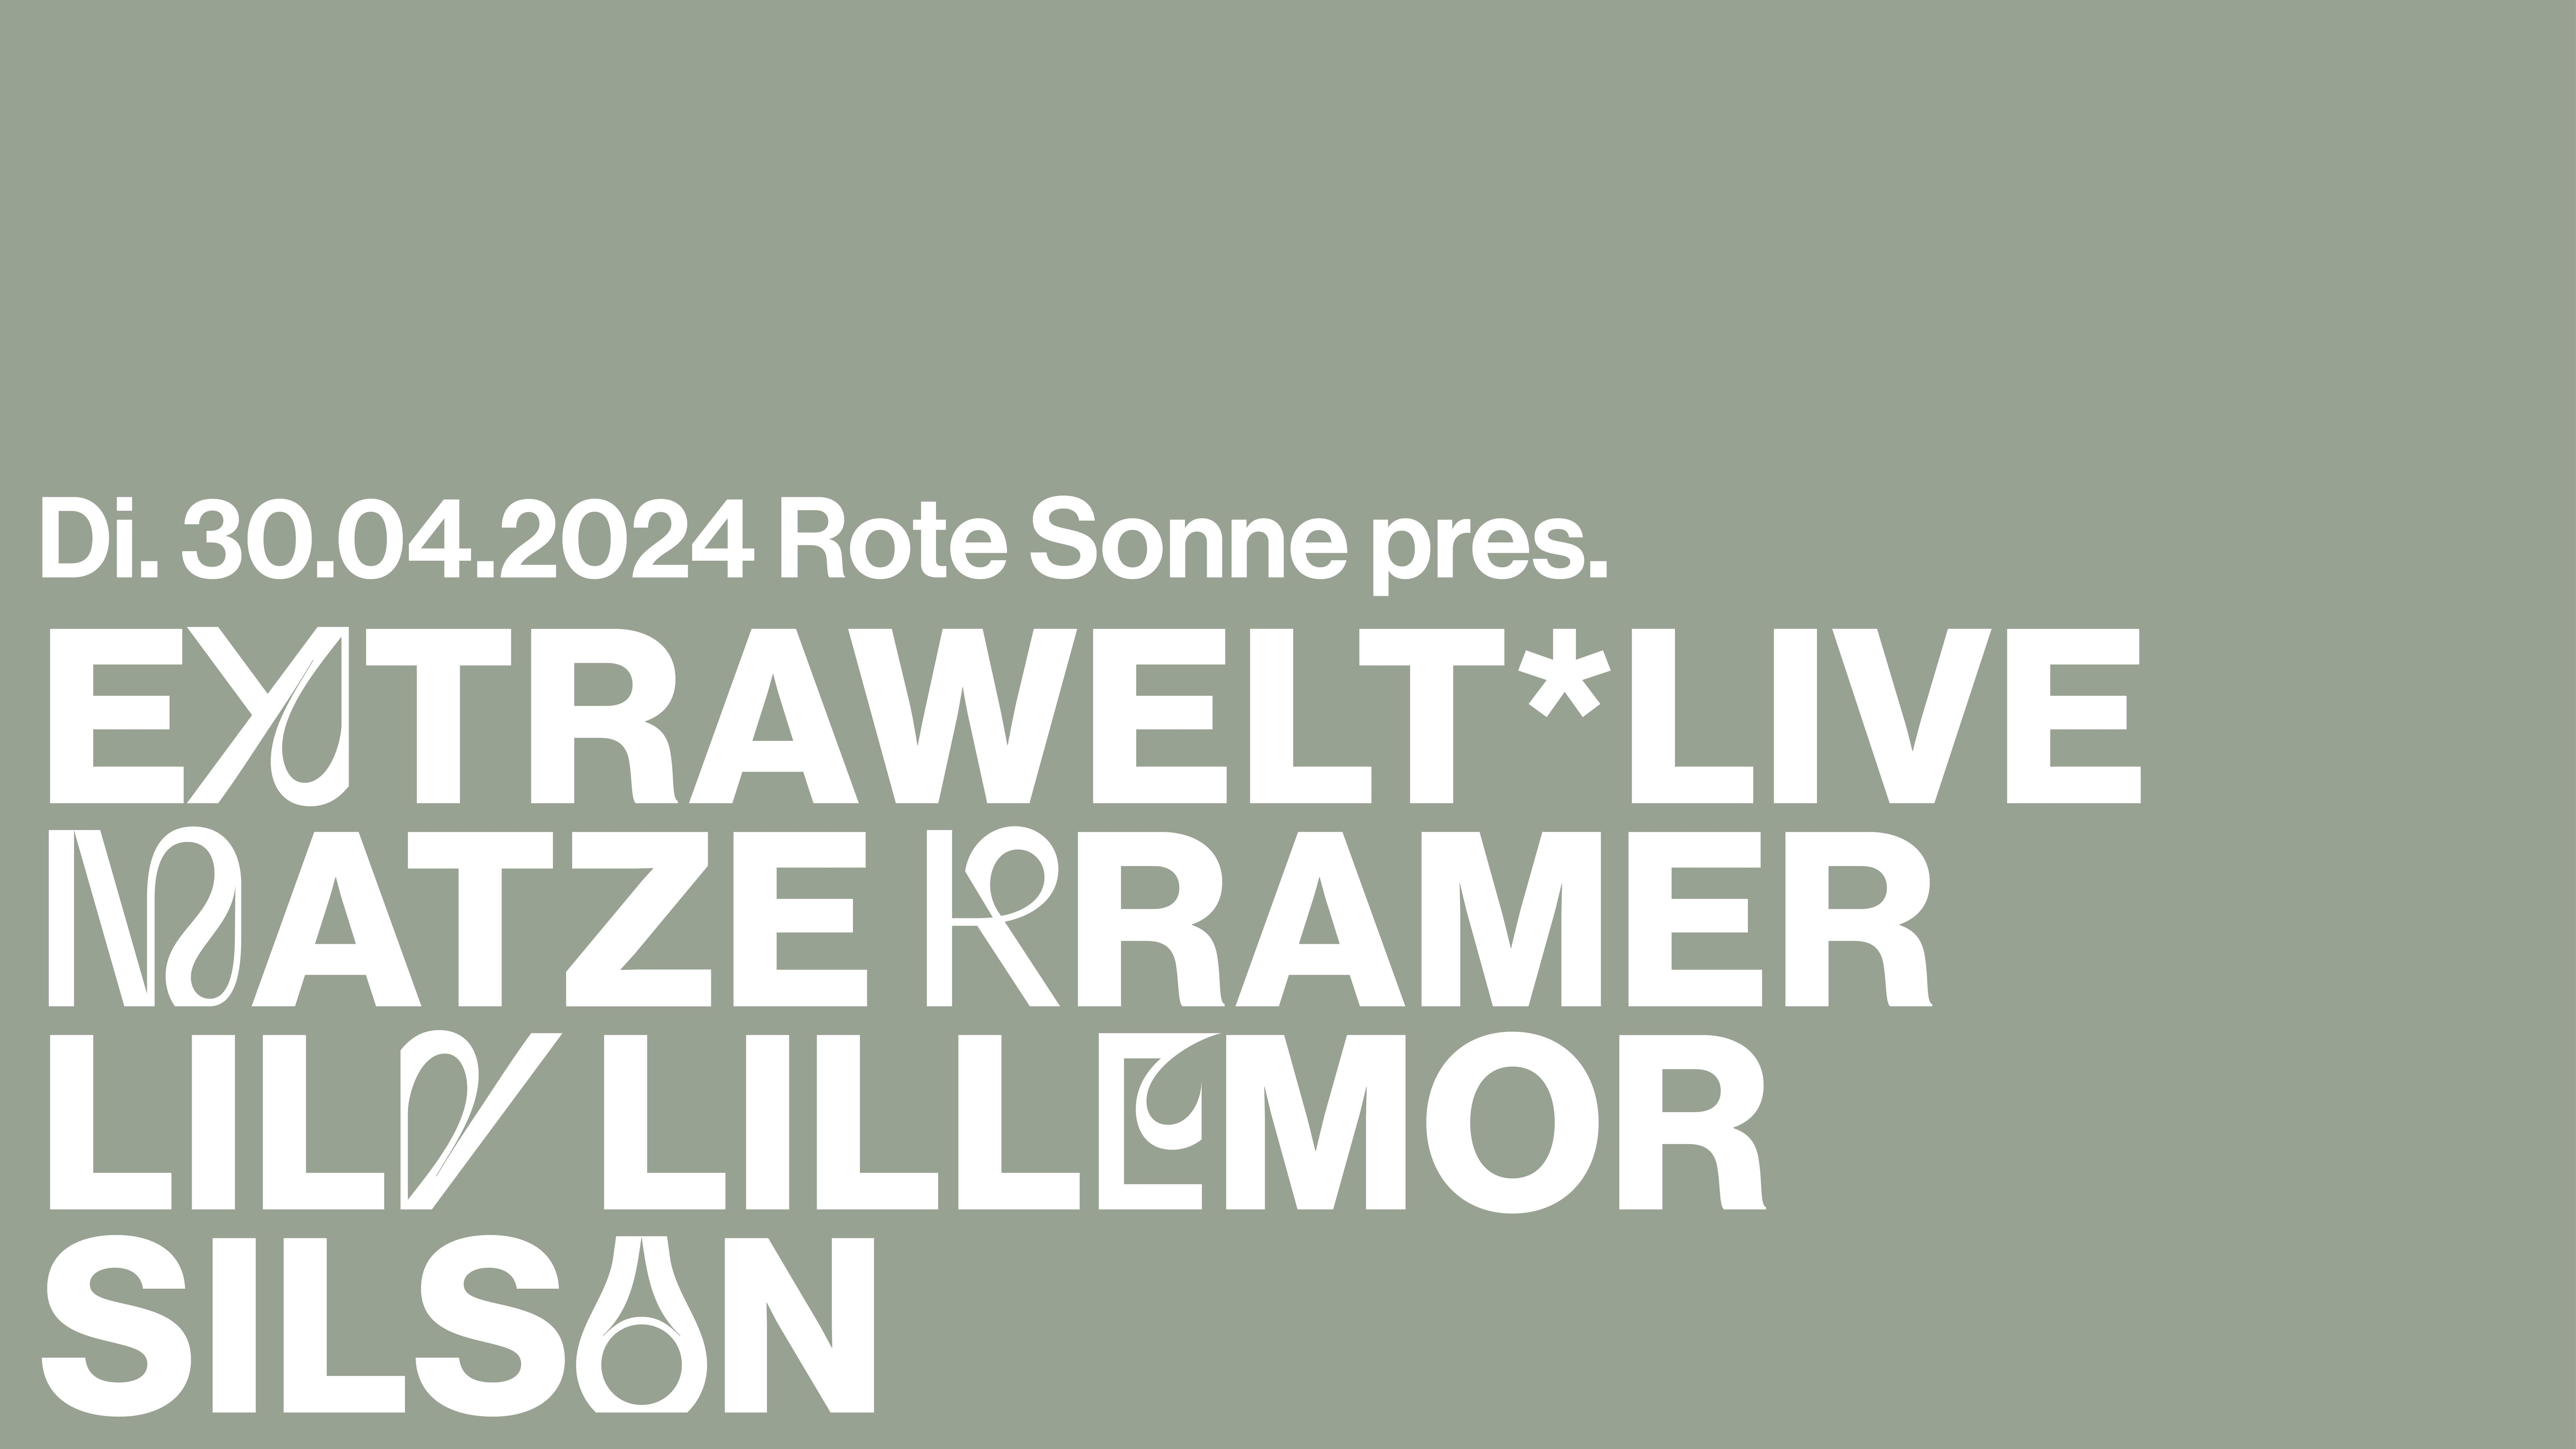 Rote Sonne pres. Extrawelt *live, Lily Lillemor, Matze Cramer, SILSAN - Página frontal